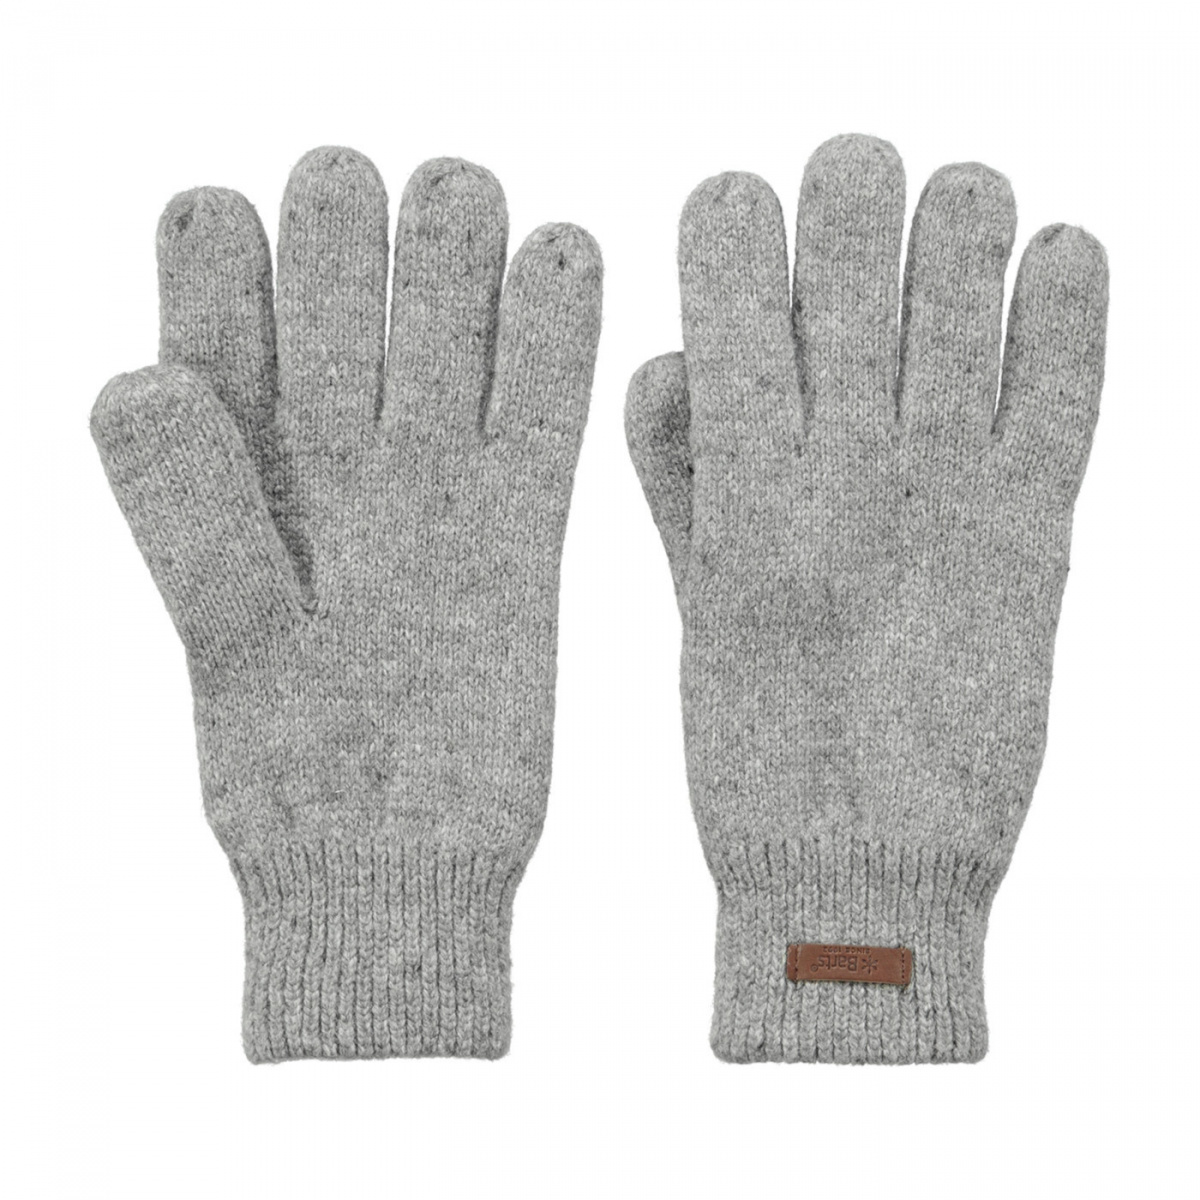 Haakon Gloves Wool Grey - Barts Reference : 9933